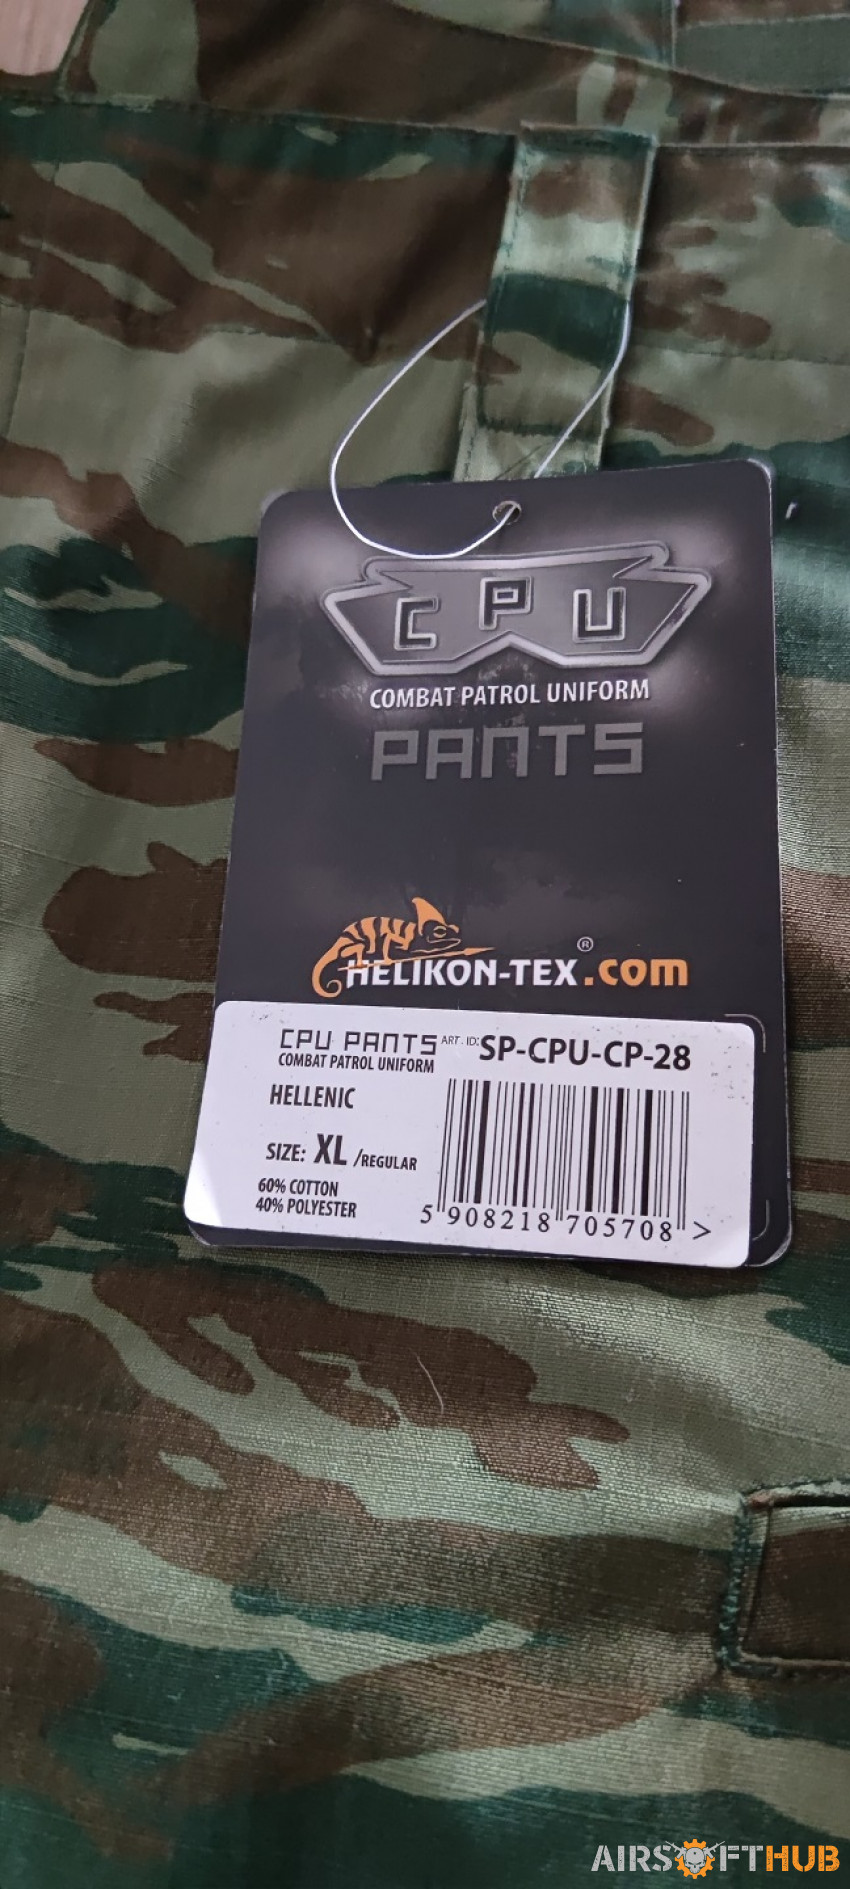 Helikon-tex cpu pants - Used airsoft equipment